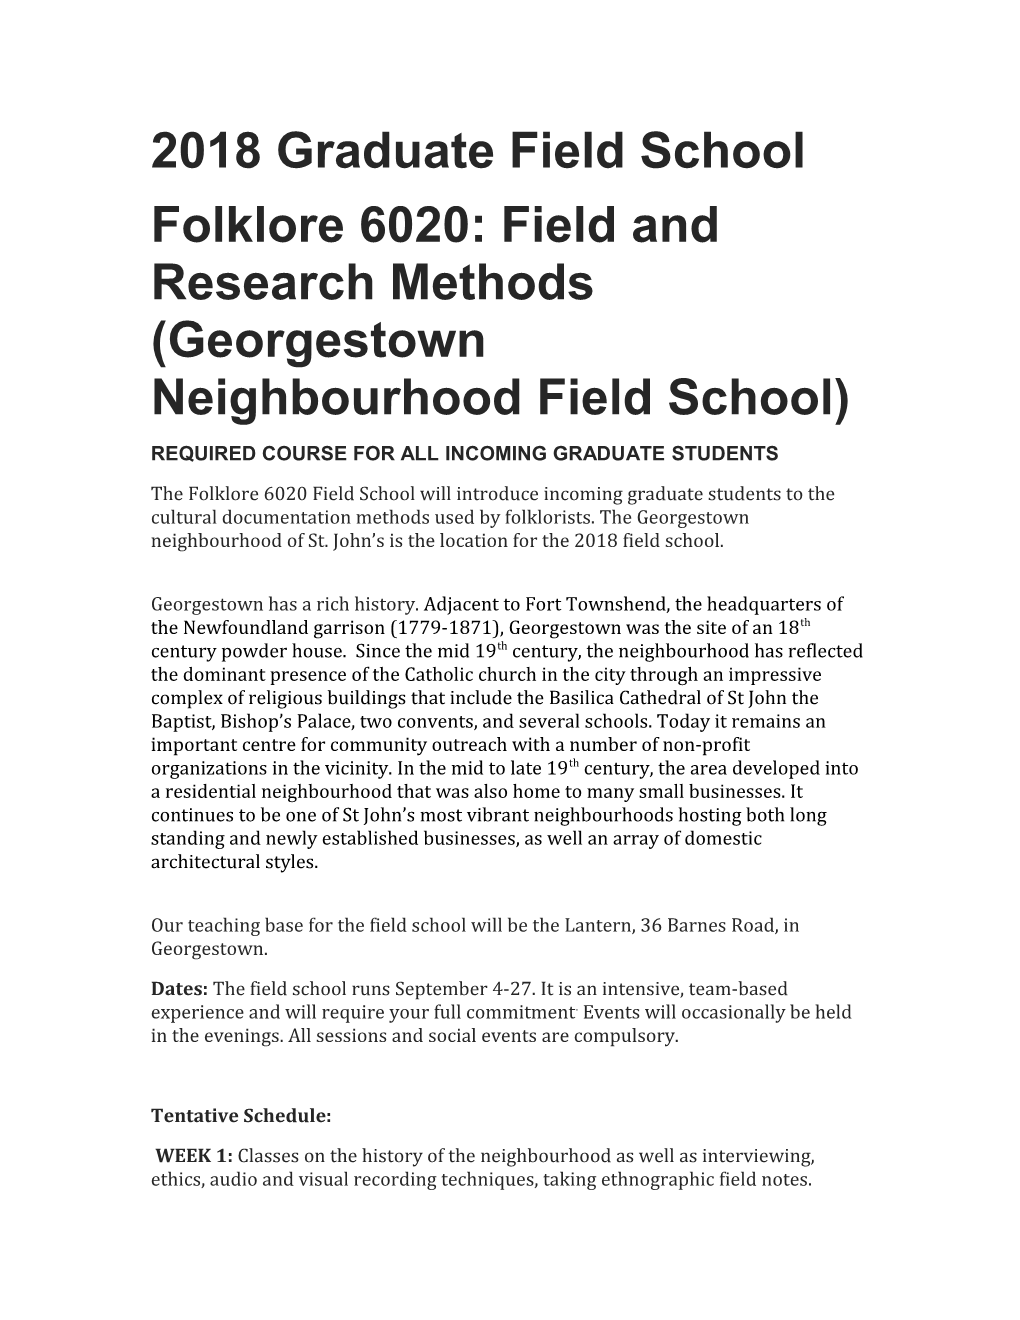 Folklore 6020: Field and Research Methods (Georgestownneighbourhoodfield School)